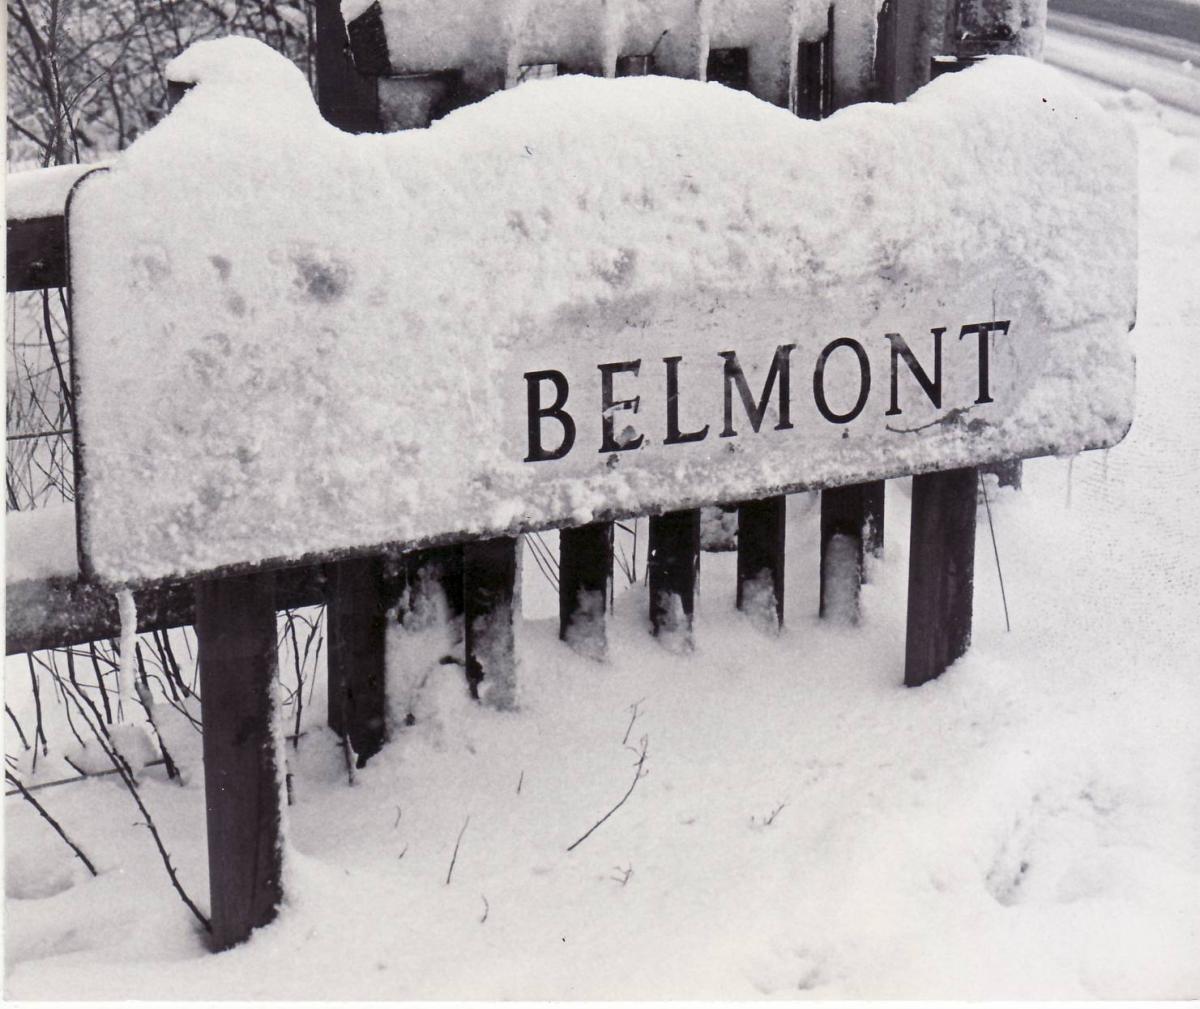 Boxing Day, January 1984 - Belmont village